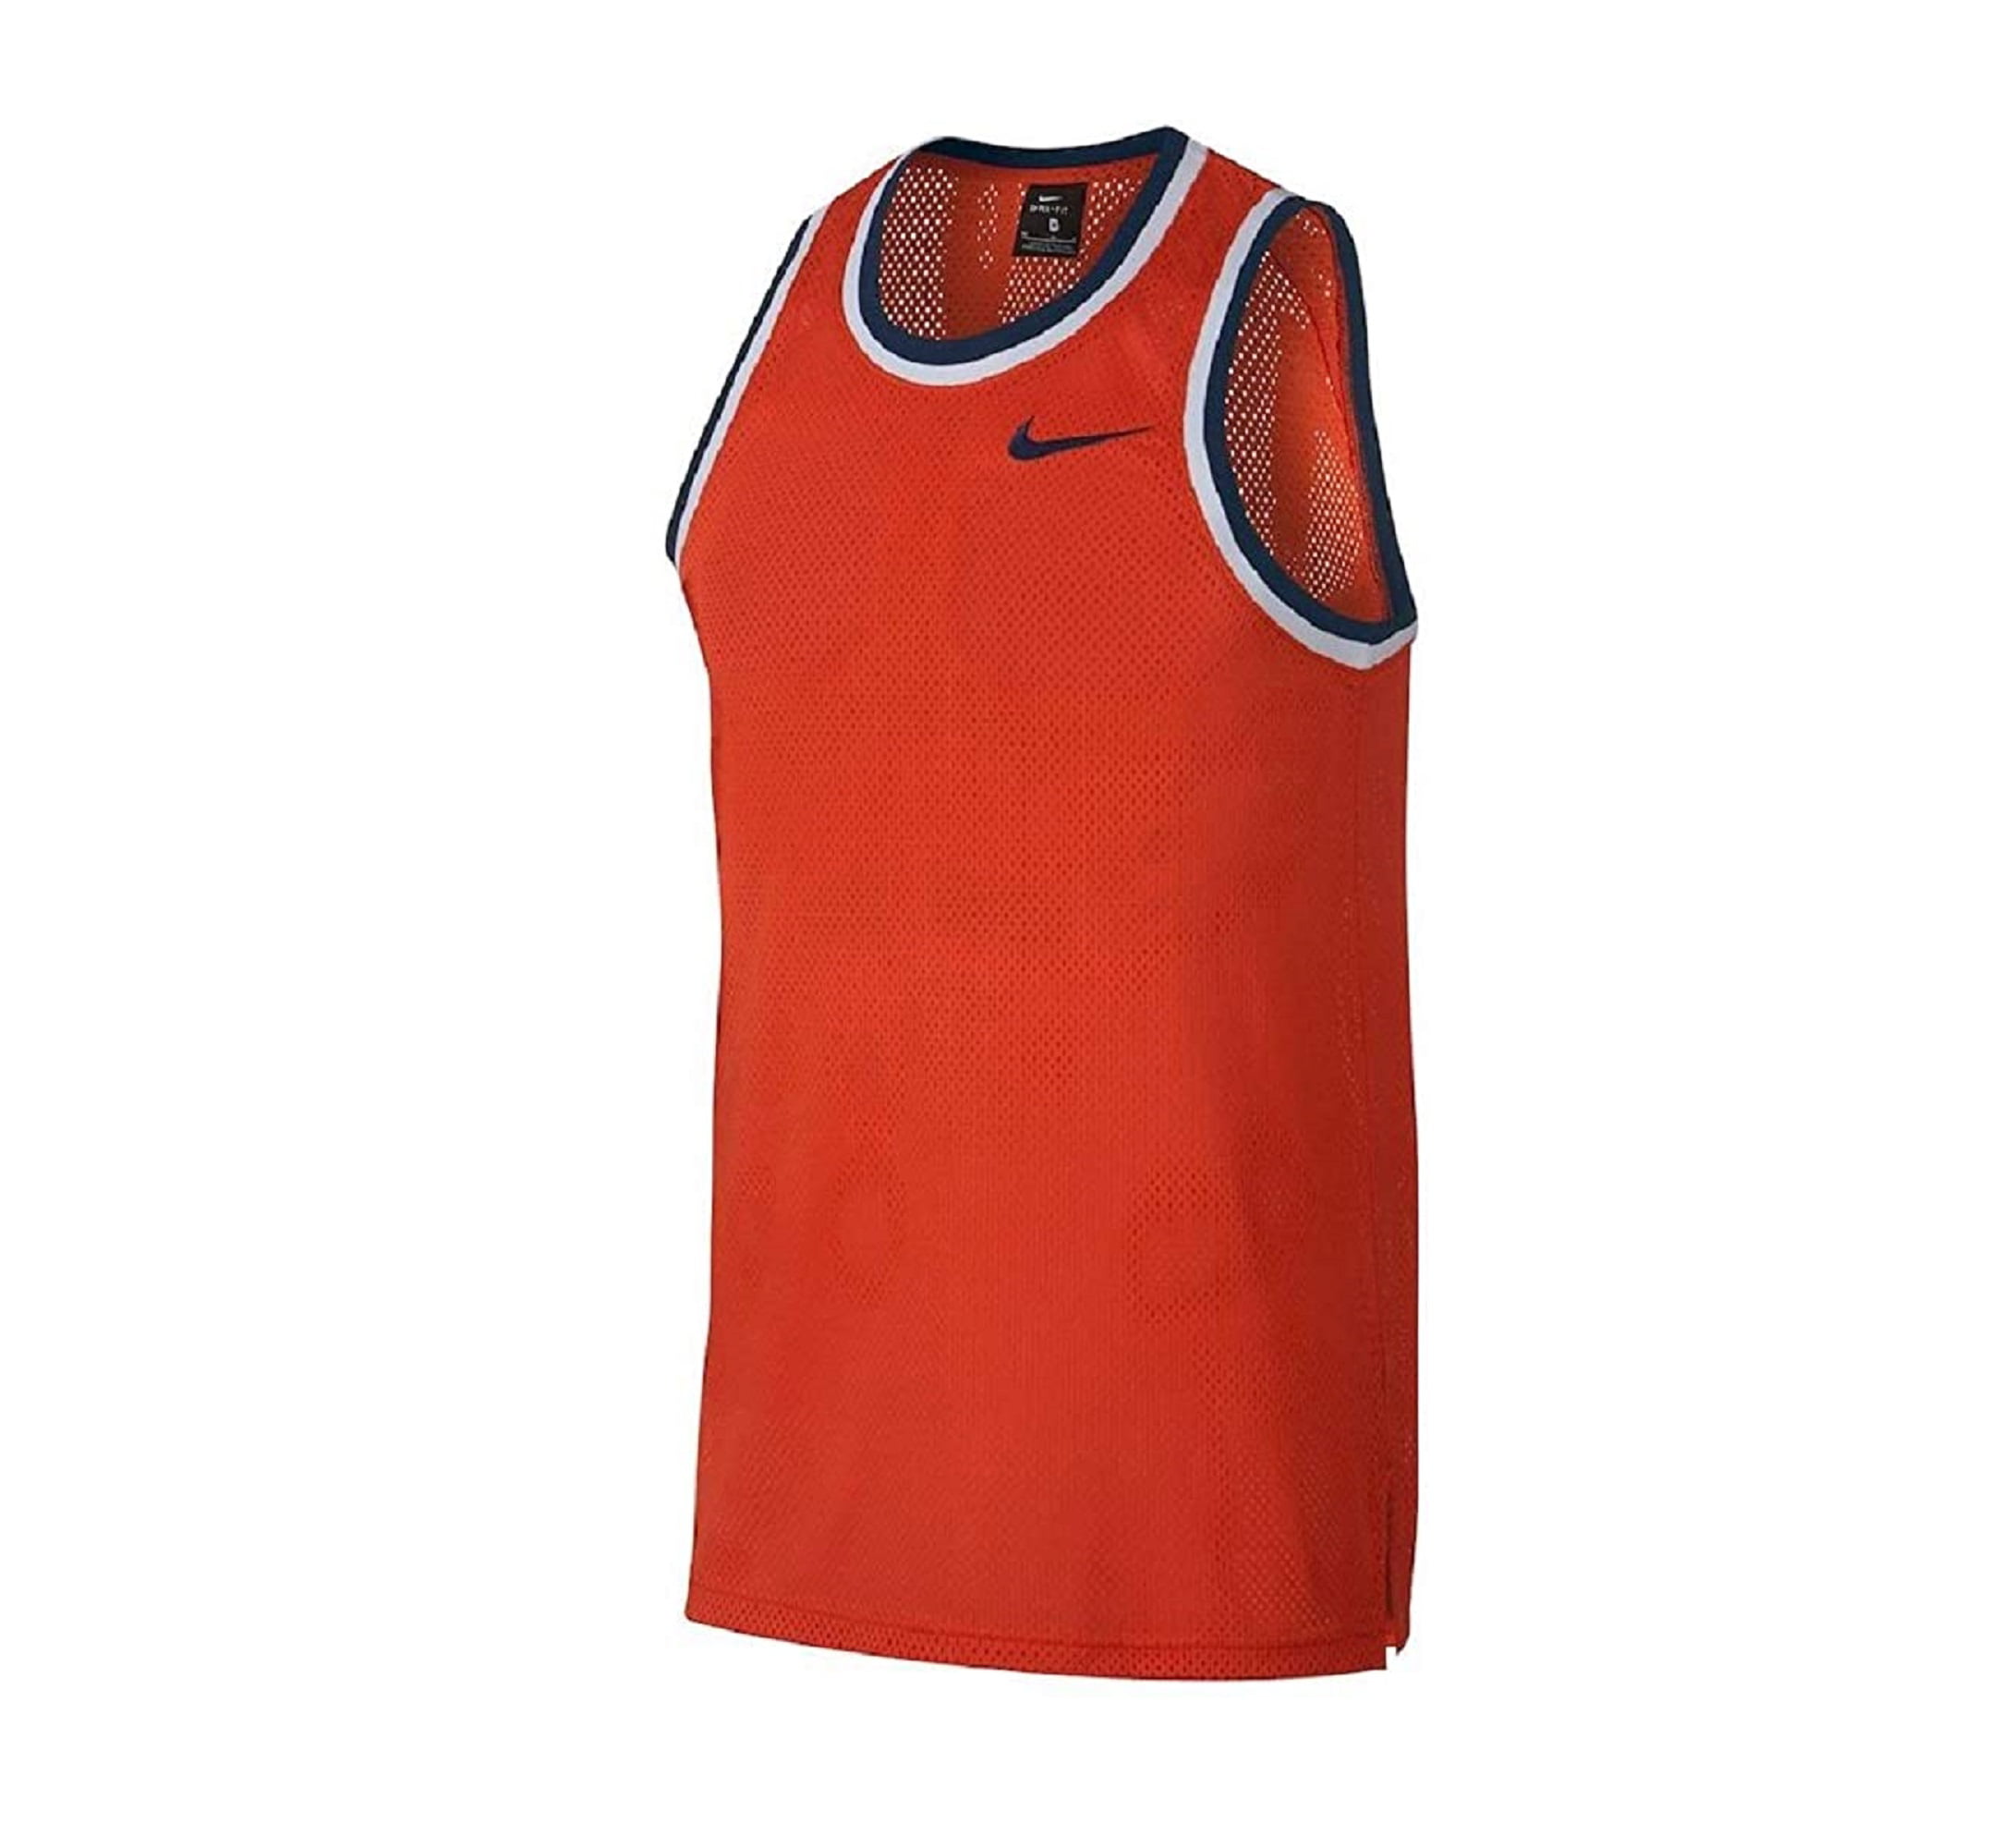 Nike - Nike Men's Dri-FIT Mesh Basketball Jersey, Orange, XL - Walmart ...